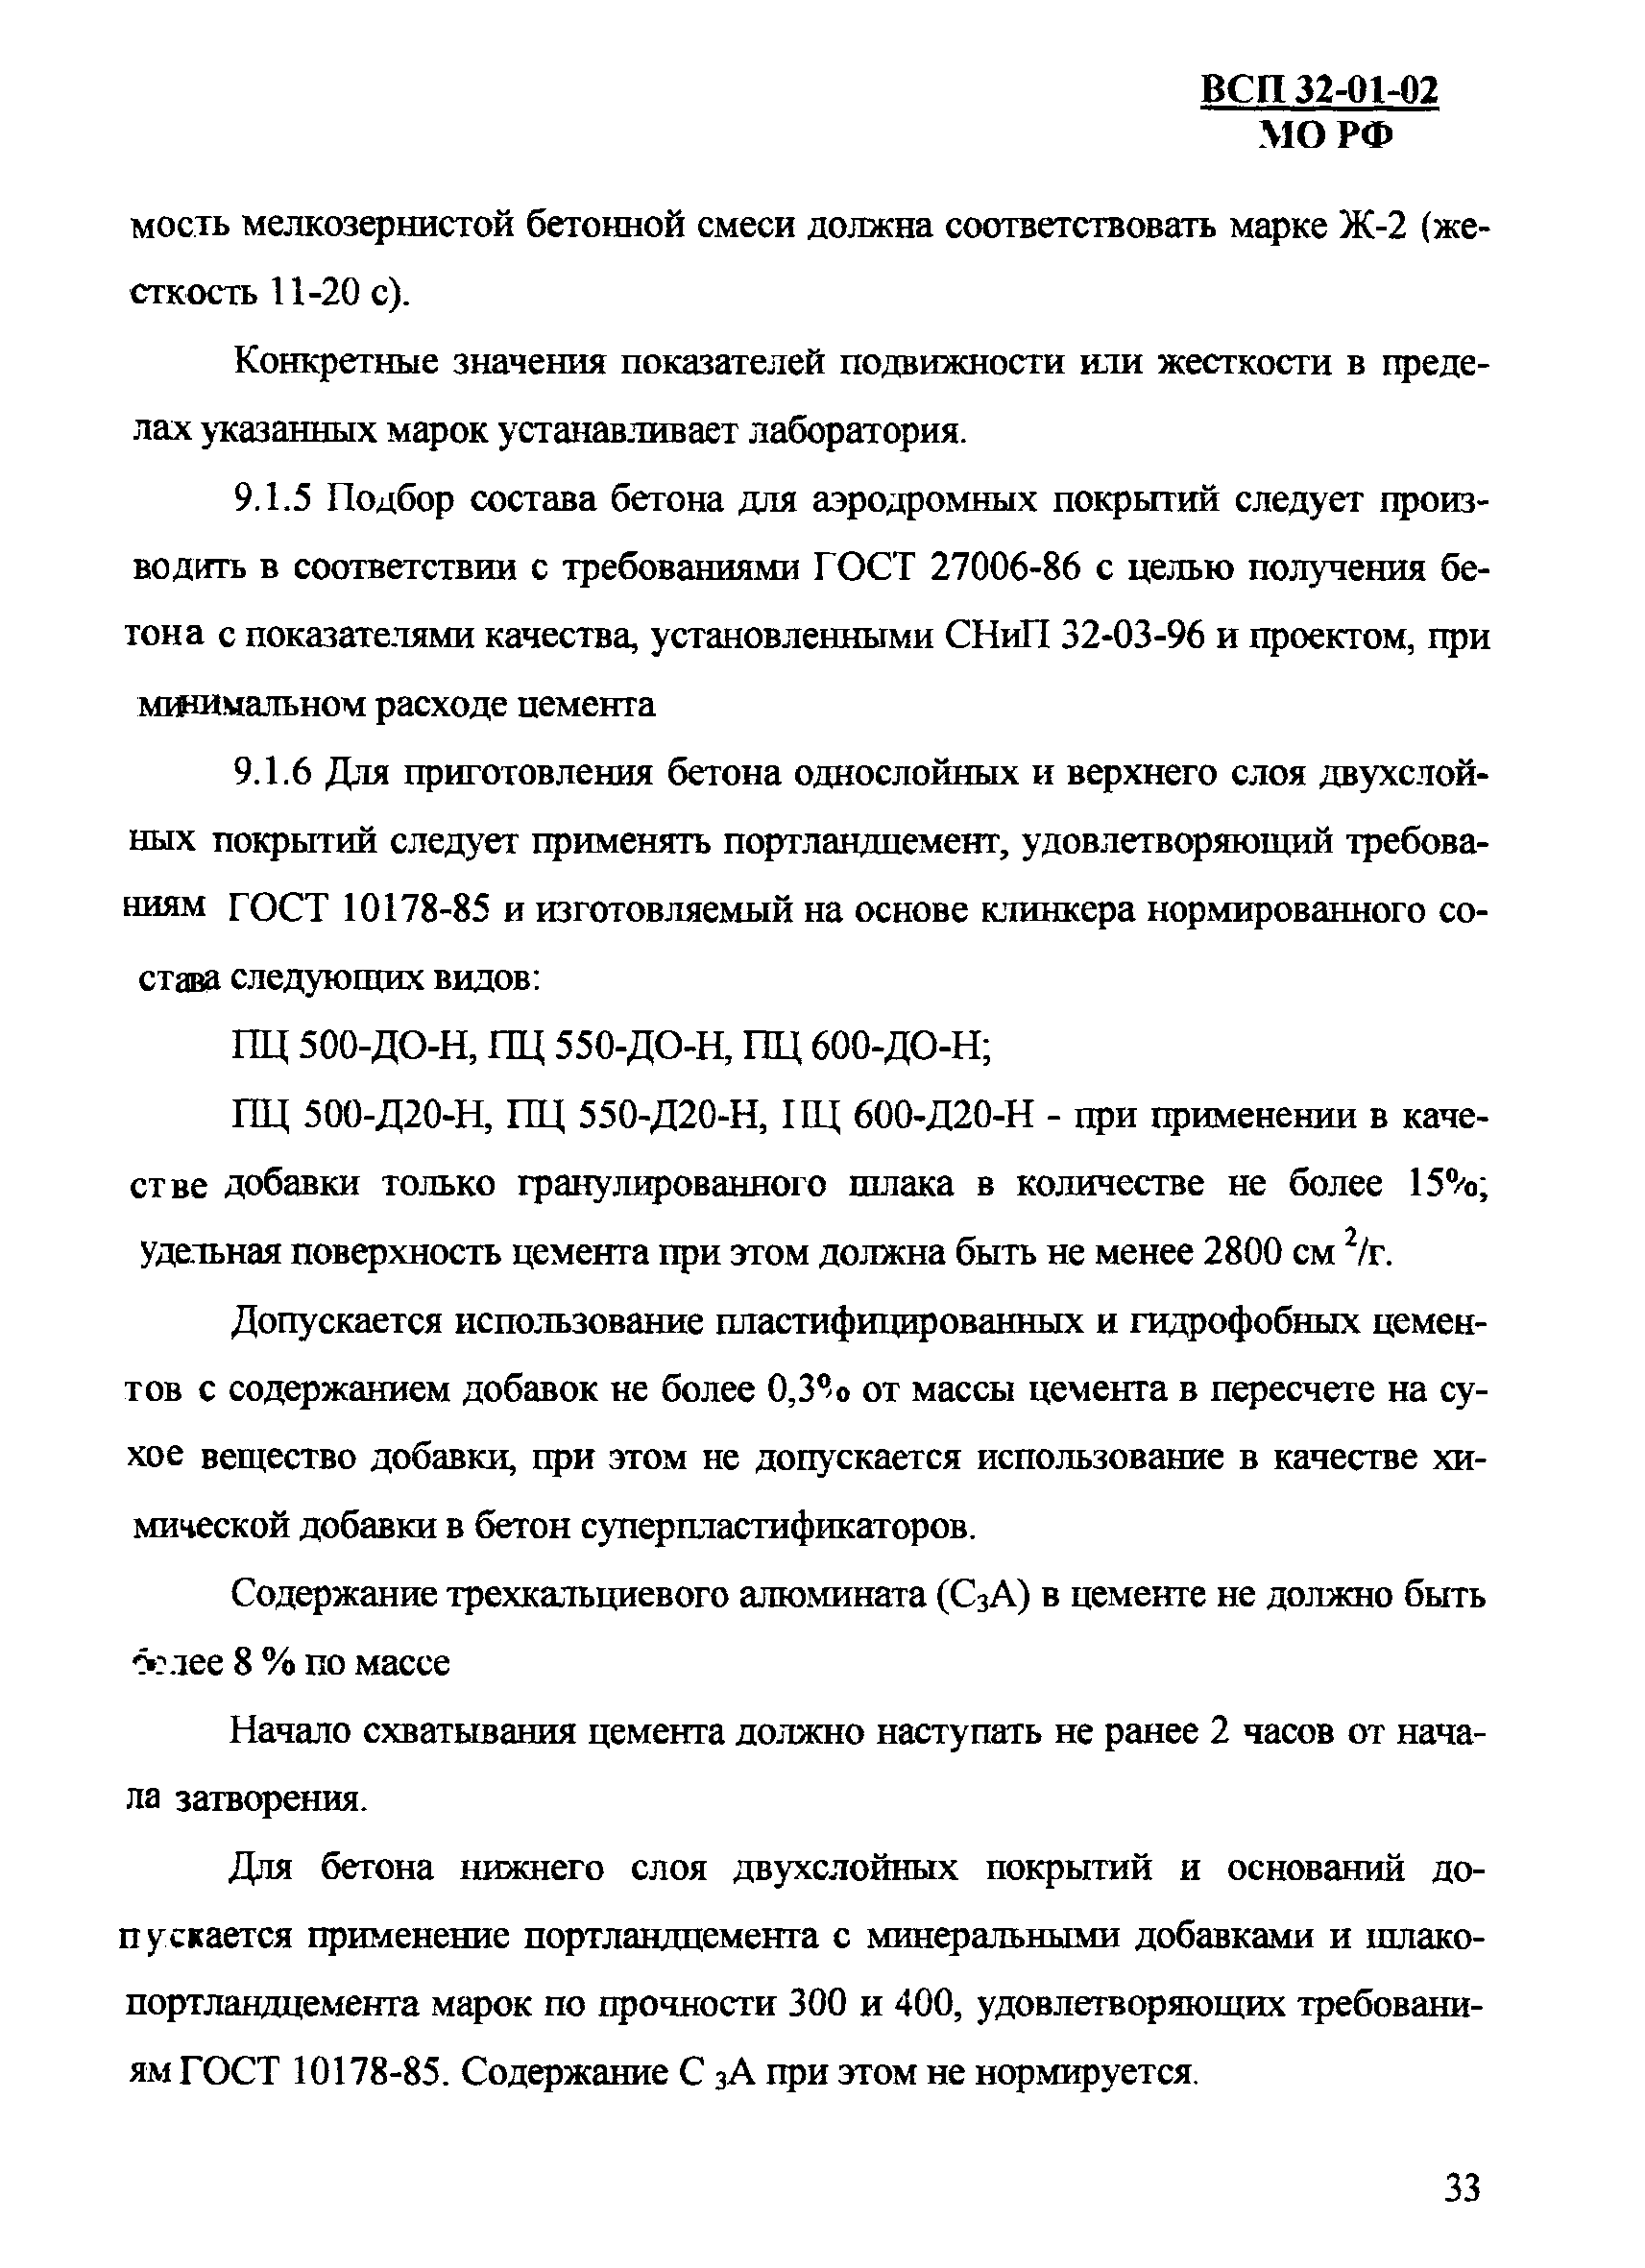 ВСП 32-01-02/МО РФ